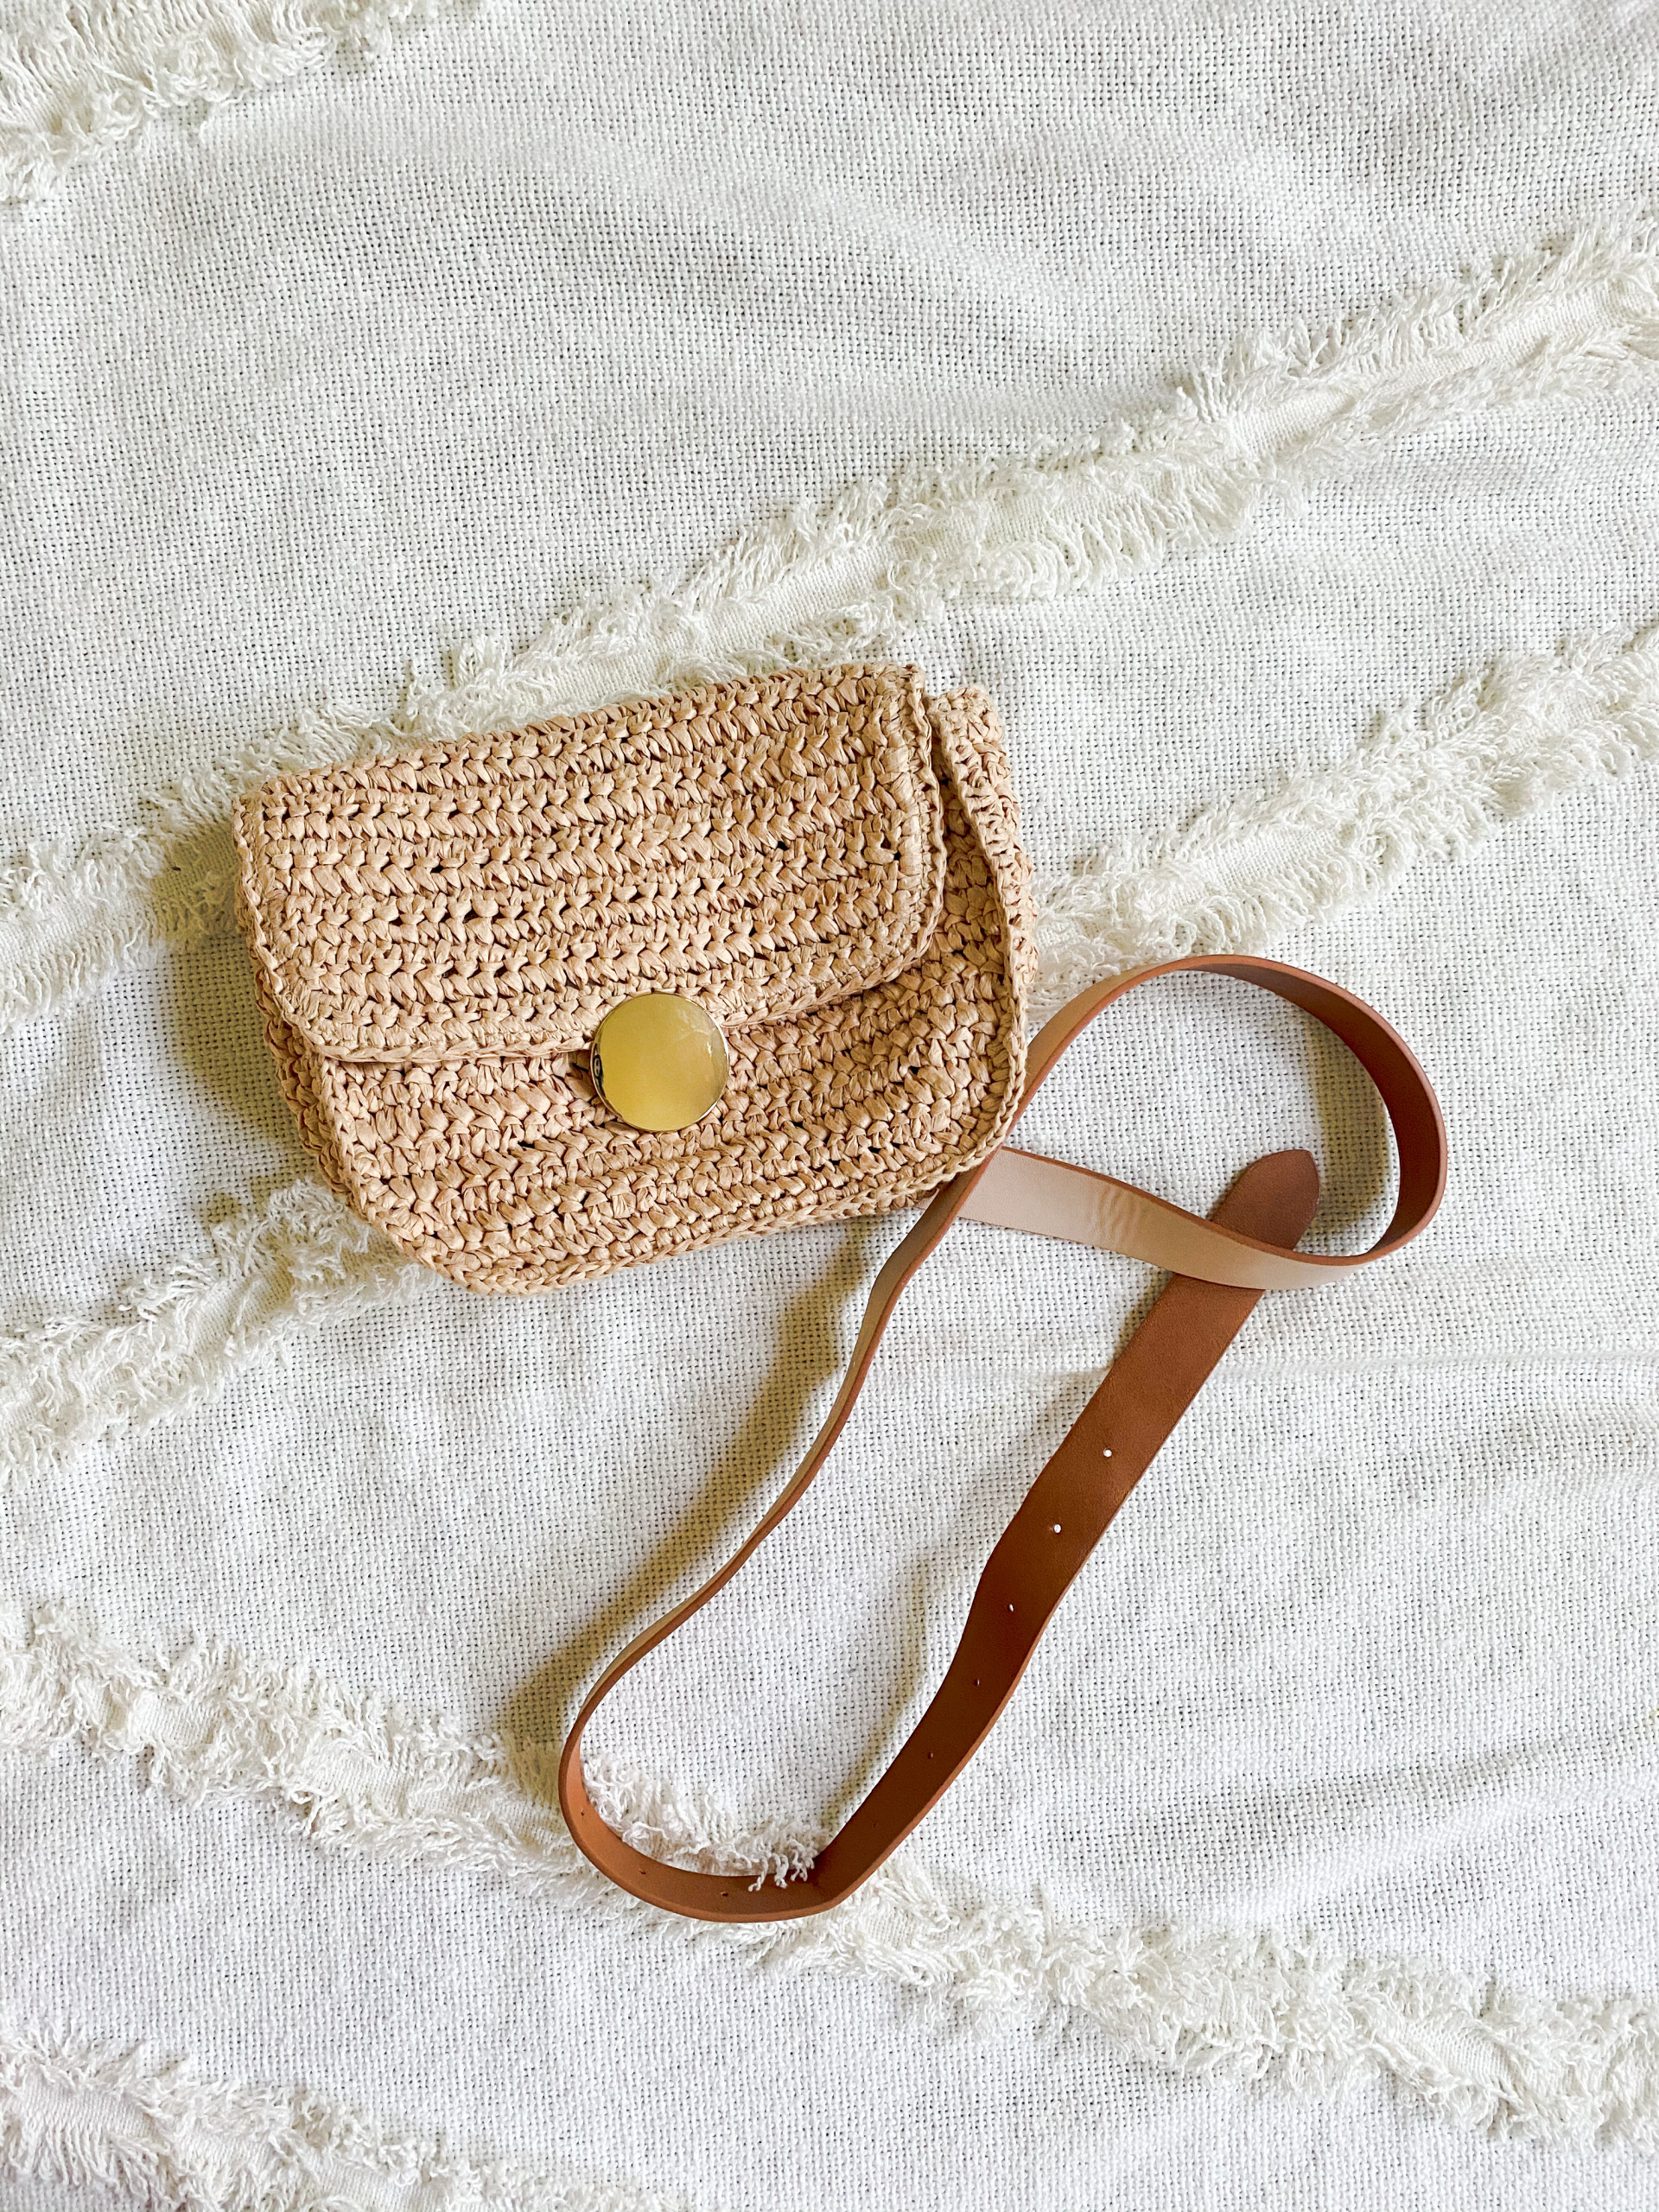 Straw belt bag, best summer accessories, beach vacation looks 